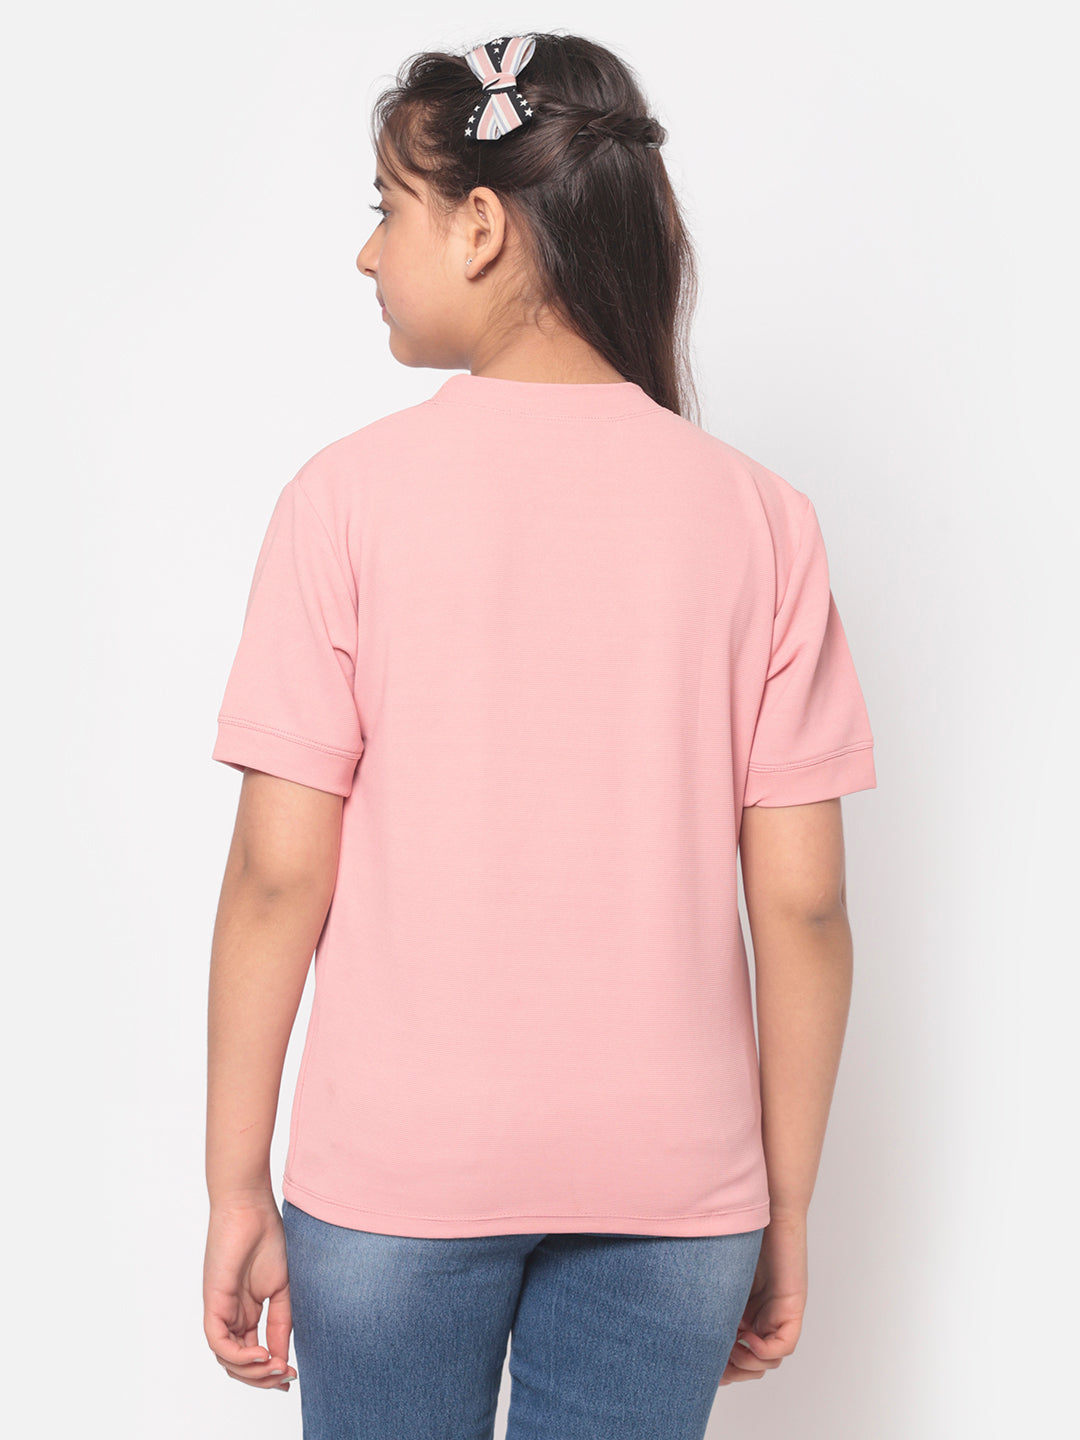 MINOS Solid Pink Top